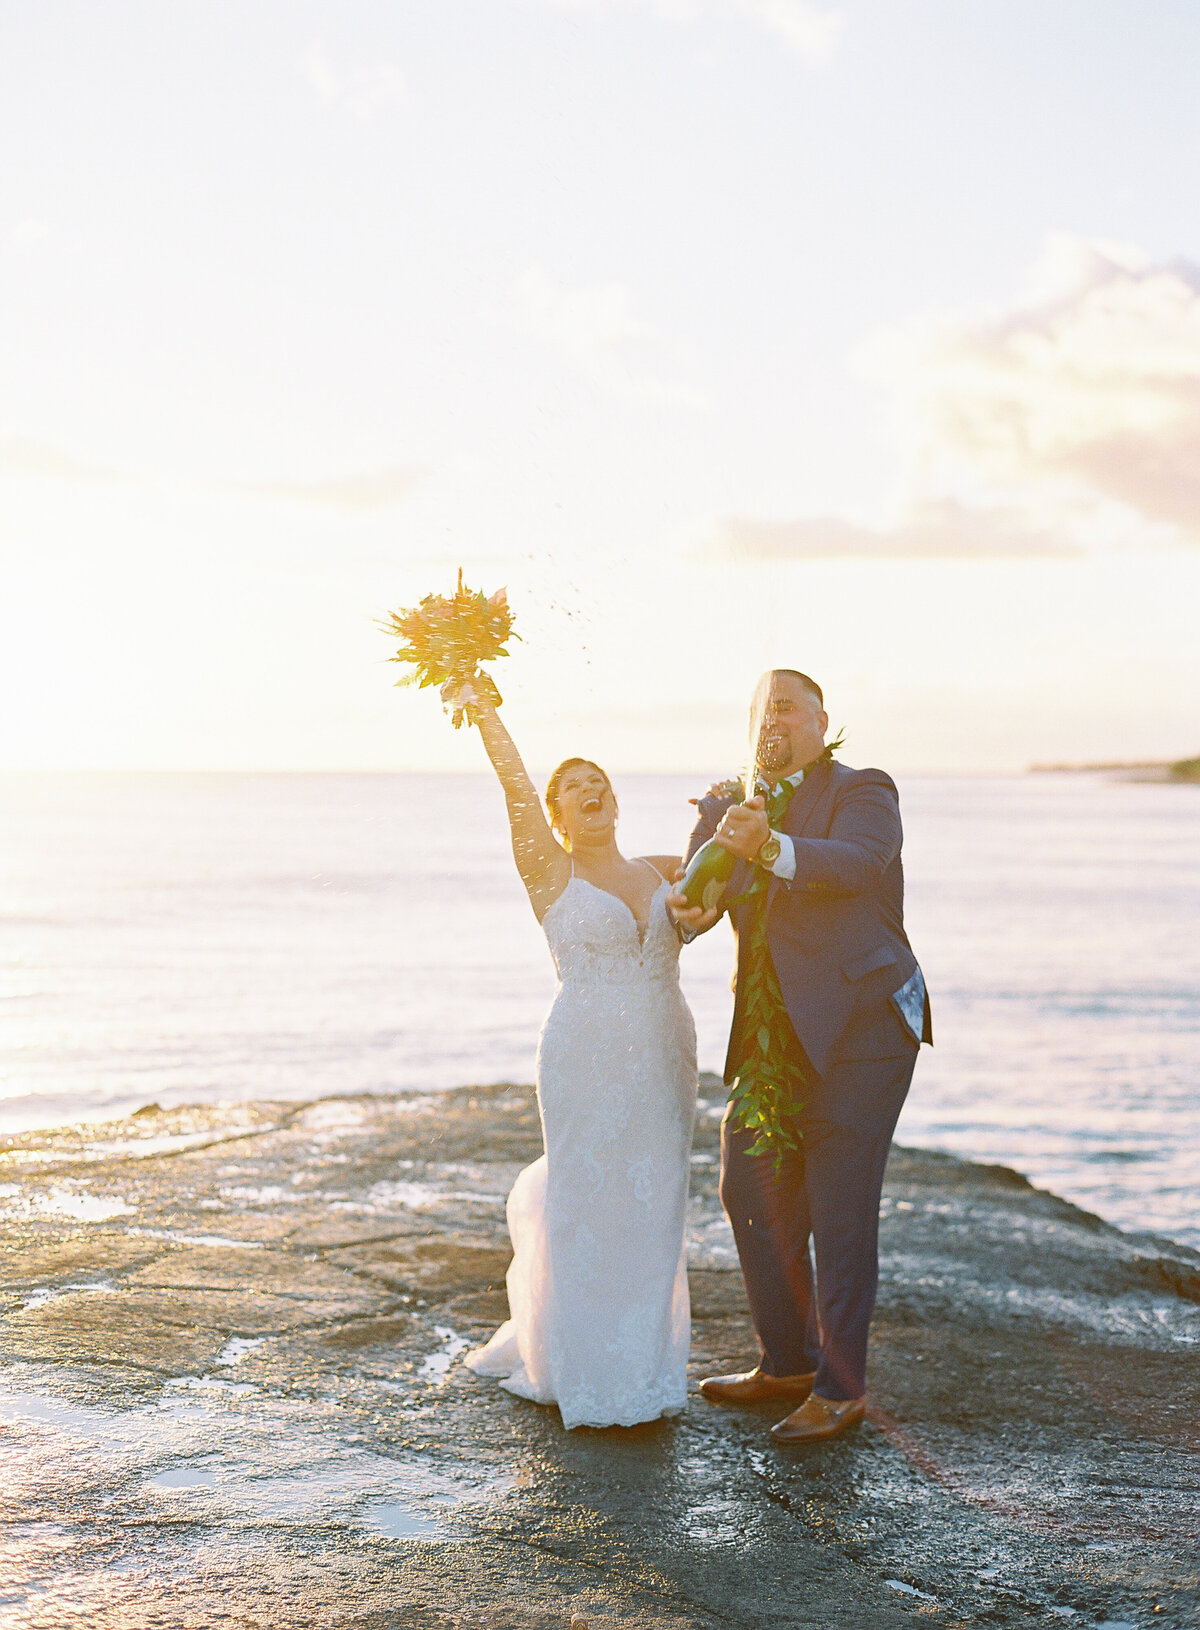 Maui Love Weddings and Events Maui Hawaii Full Service Wedding Planning Coordinating Event Design Company Destination Wedding 28